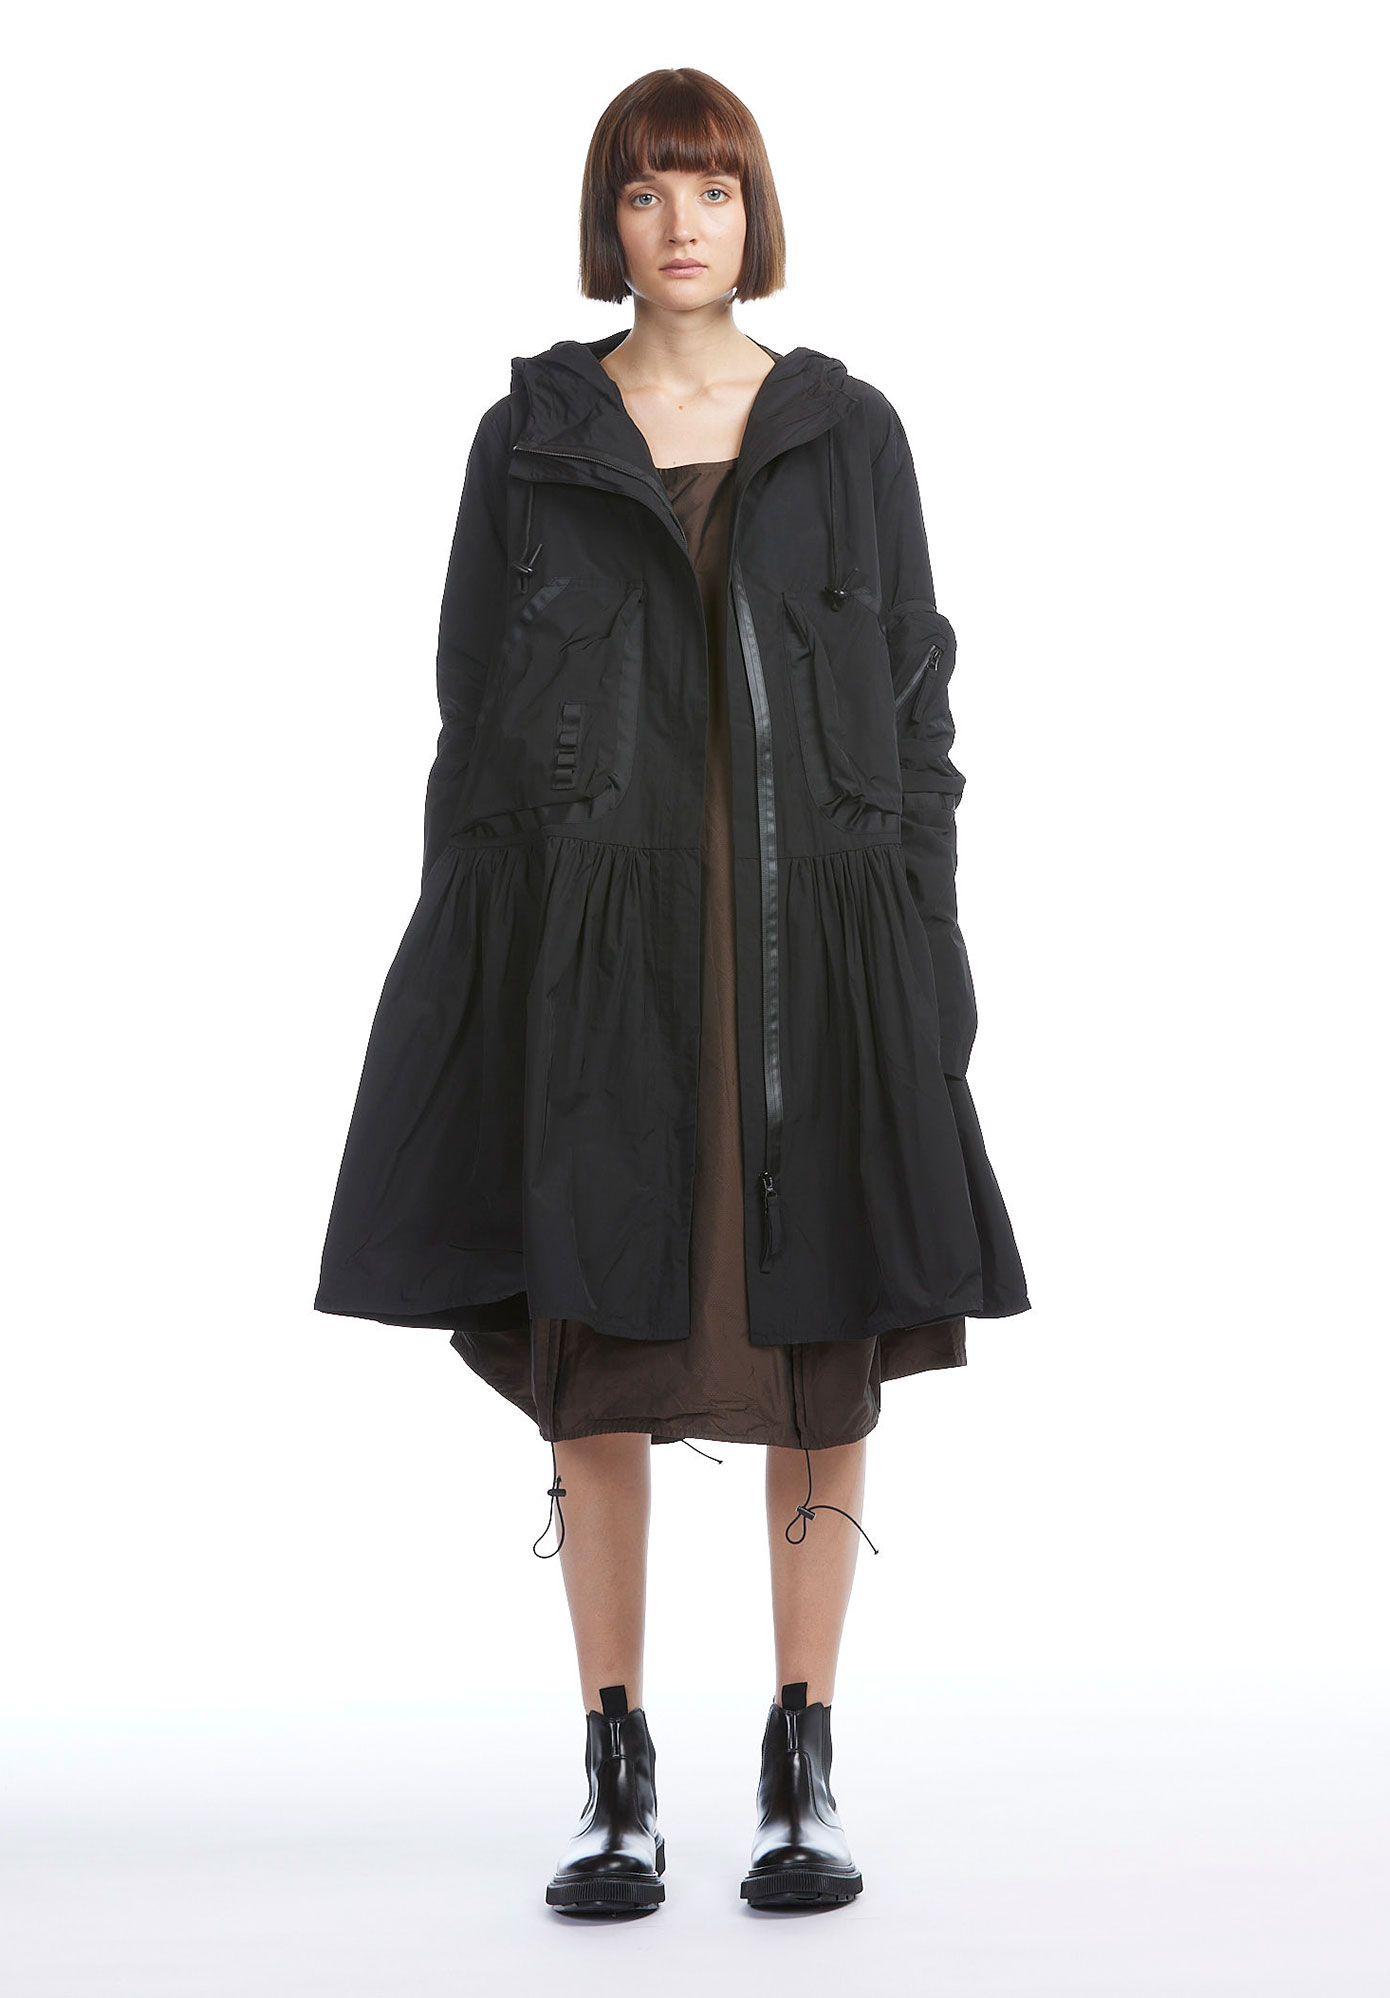 UTILITY MULTI POCKET DRESS COAT - BLACK